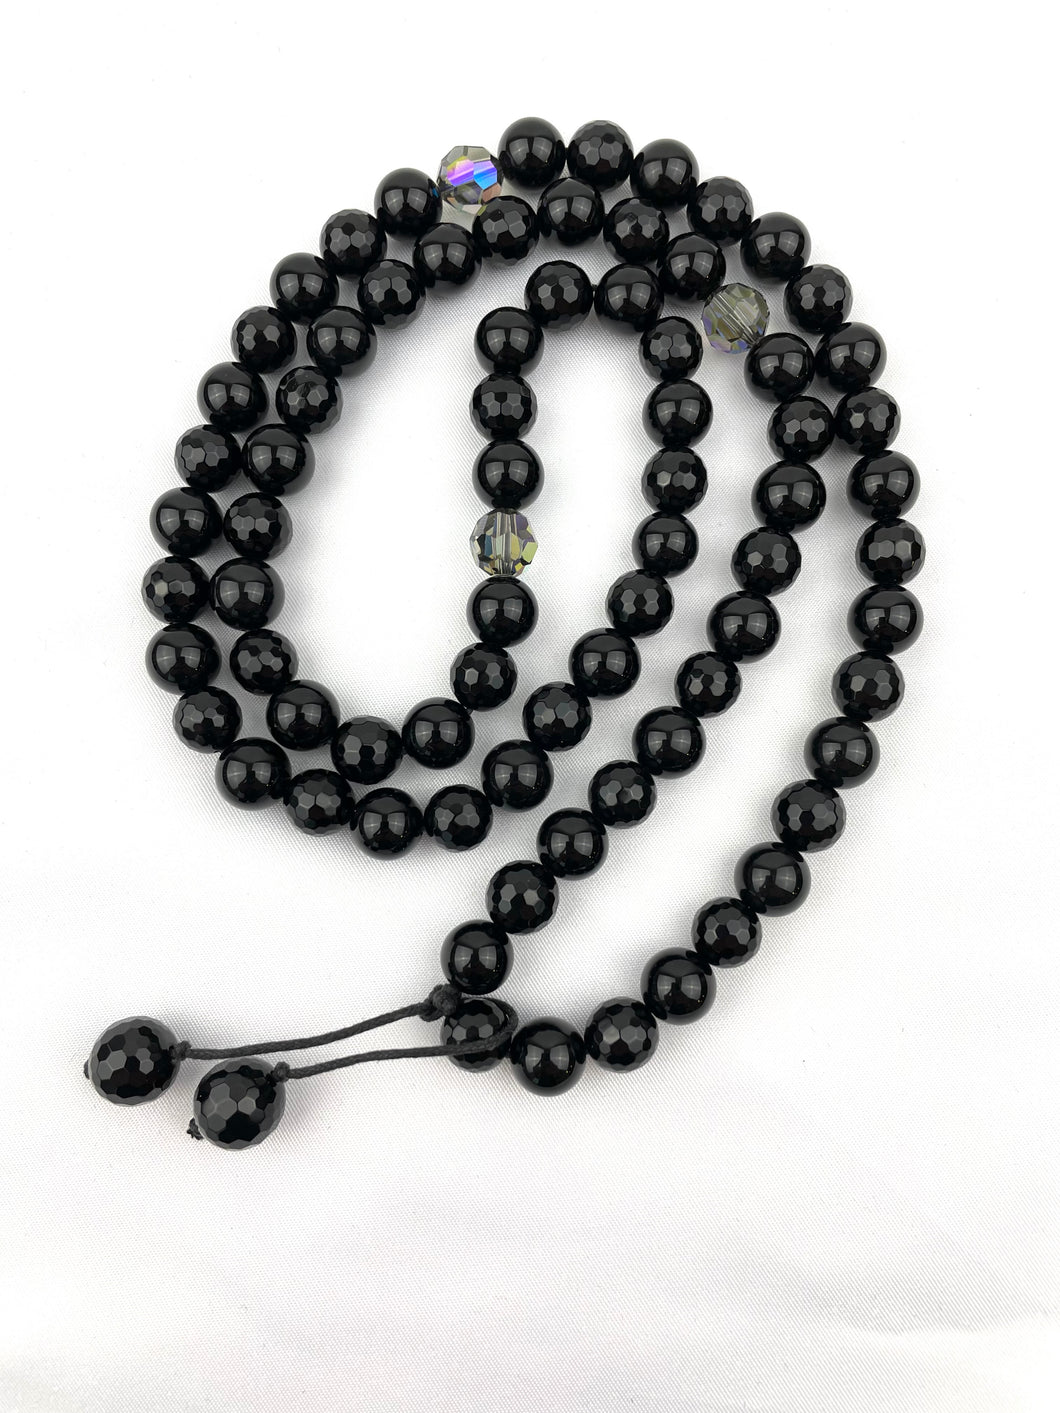 Black Onyx necklace by BlueBird